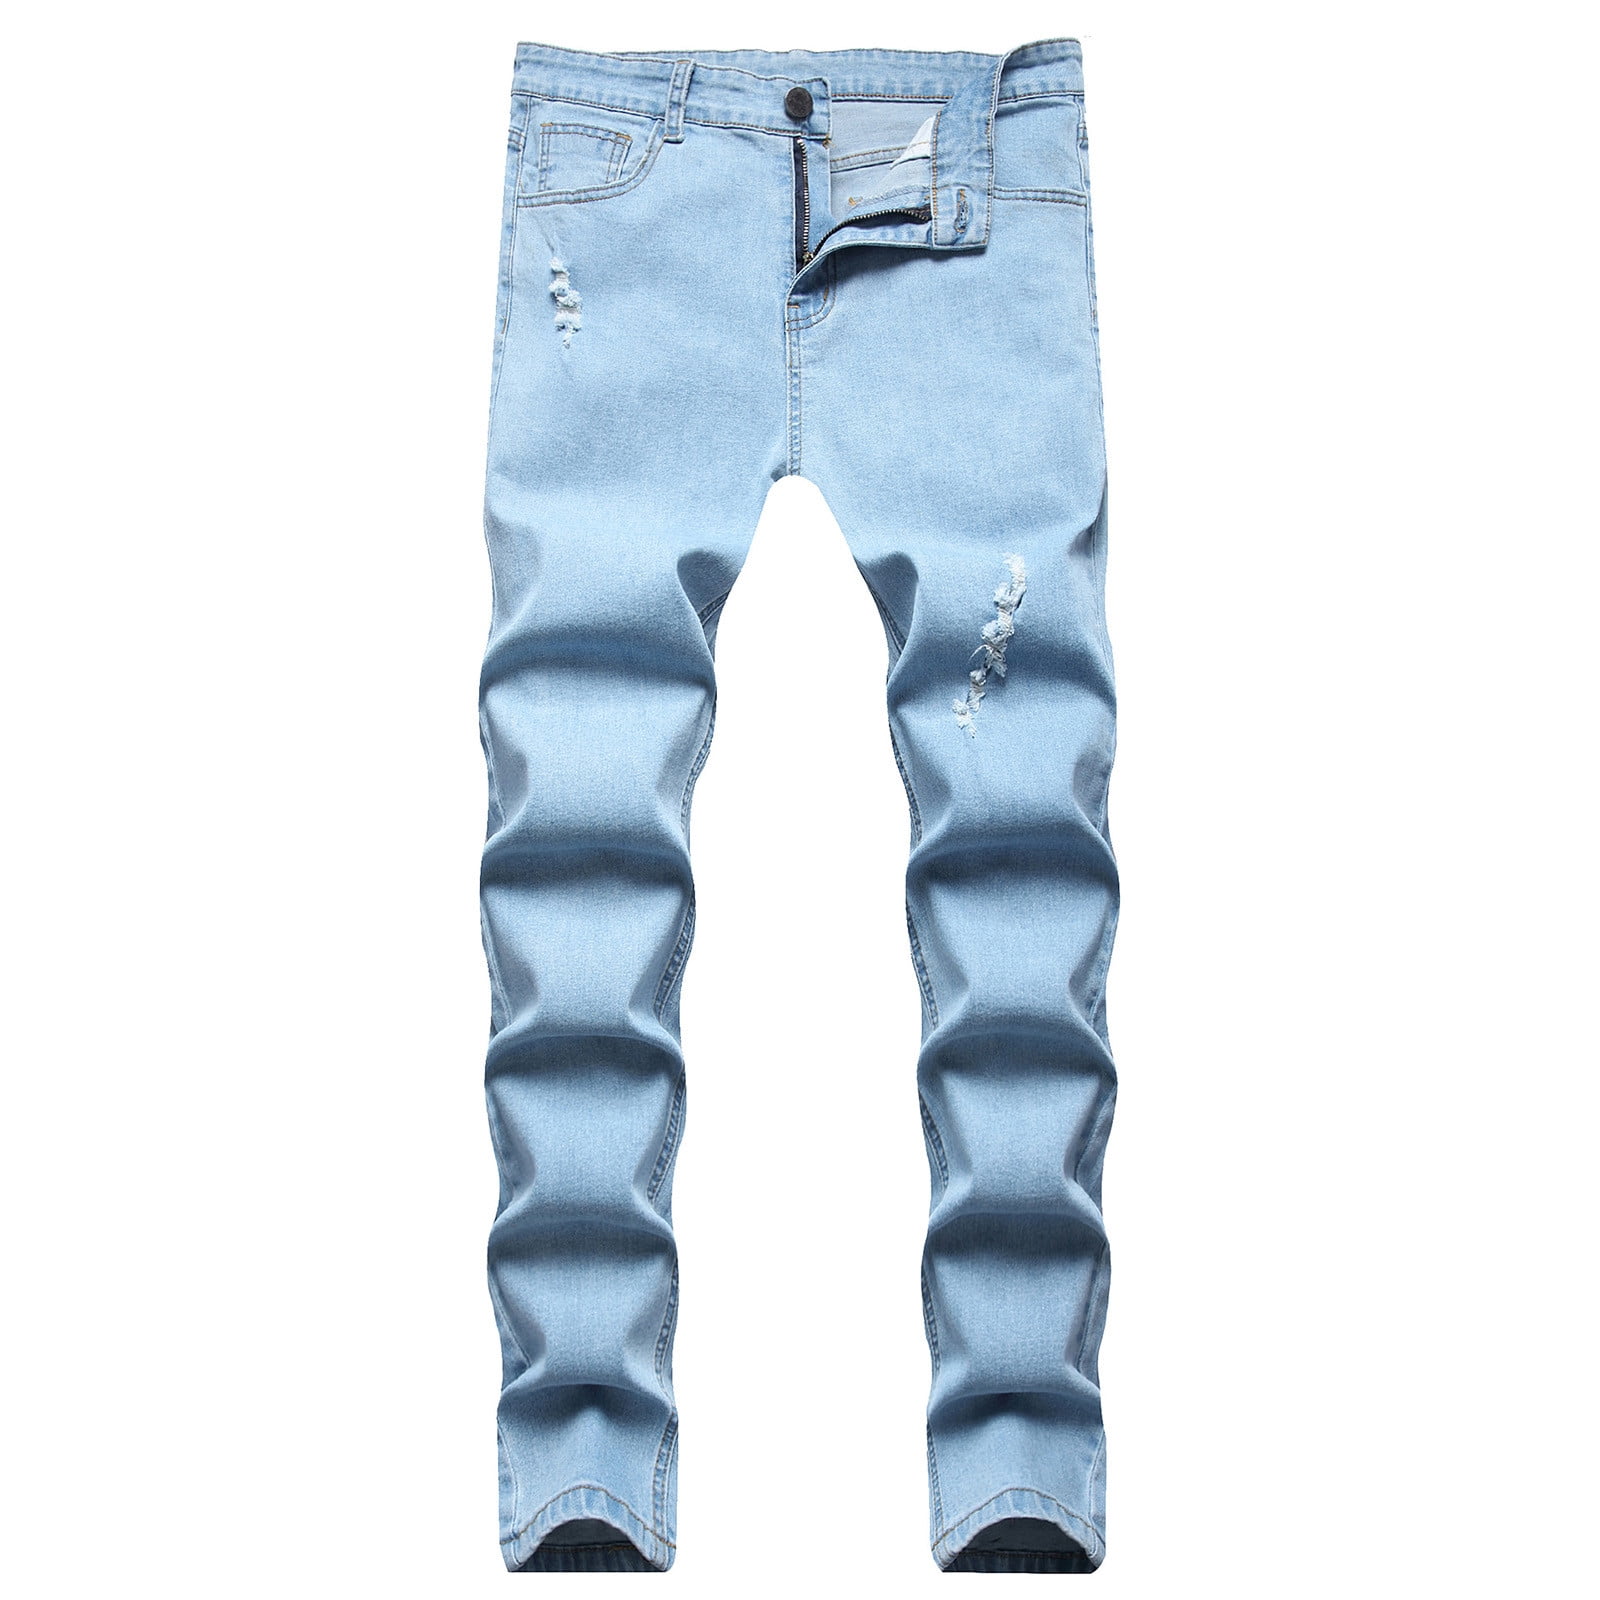 Men's Ripped Distressed Denim Shorts Classic Moto Slim Fit Jean Shorts  Holes Pleated Zipper Comfy Jeans Biker Shorts (Light Blue 1,34)